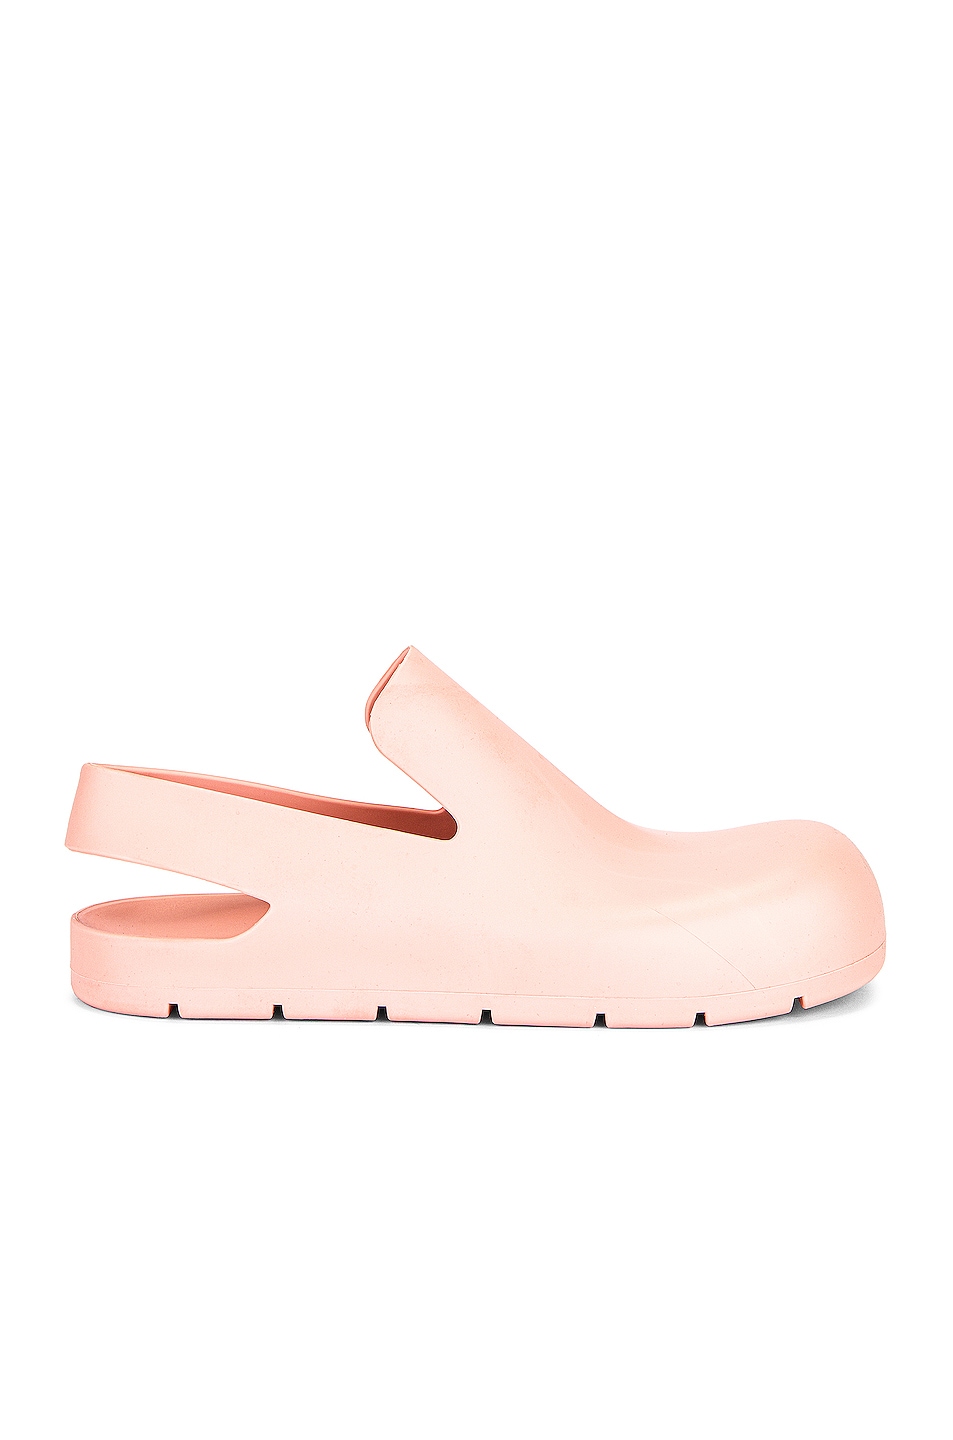 Bottega Veneta Puddle Sandals in Pink